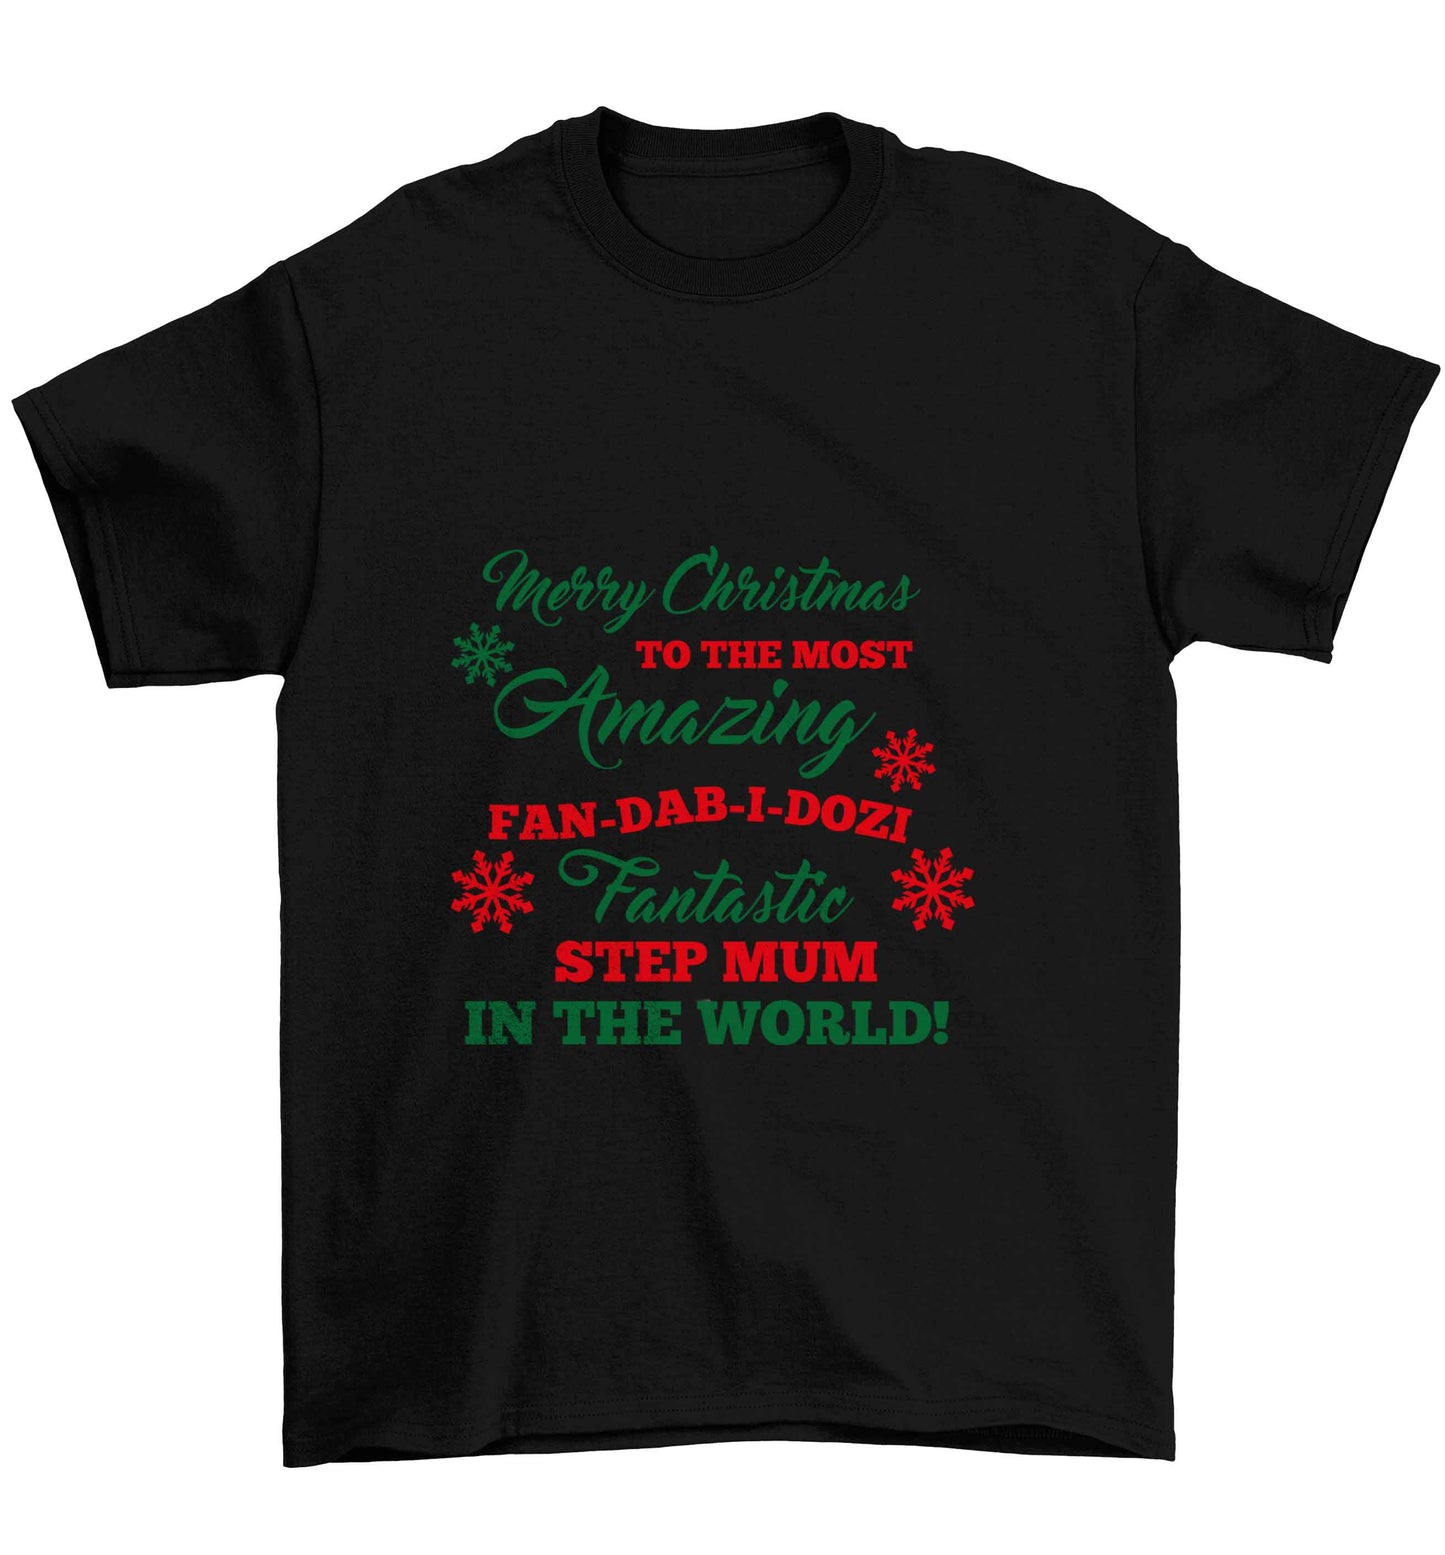 Merry Christmas to the most amazing fan-dab-i-dozi fantasic Step Mum in the world Children's black Tshirt 12-13 Years